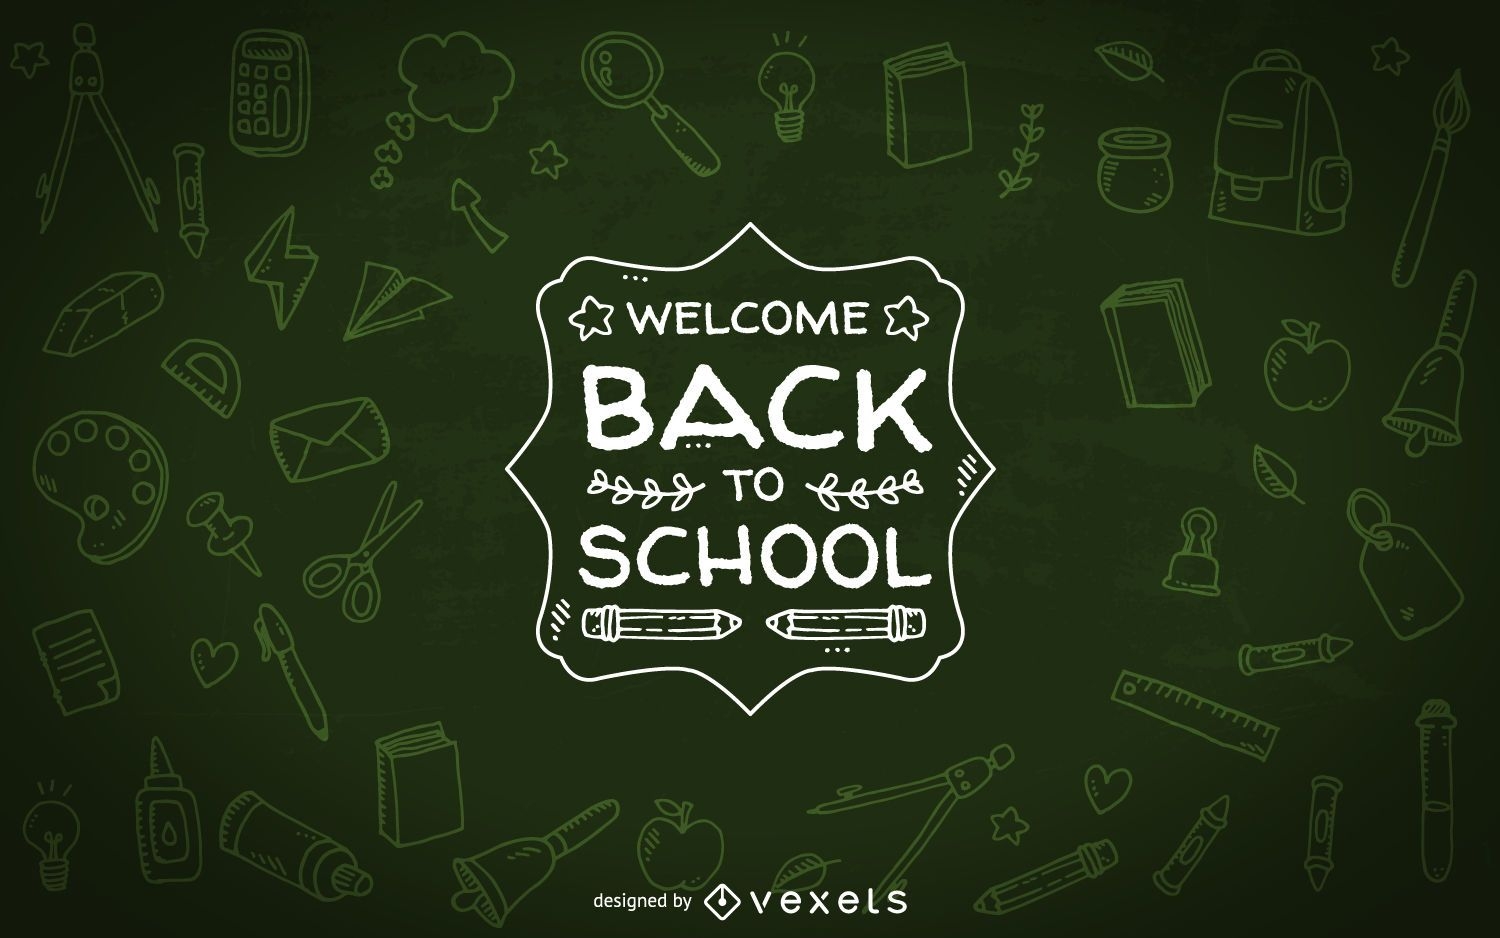 2cool4school element. Welcome back to School. Back to School логотип. Рисунки на тему back to School. Плакат Welcome back.